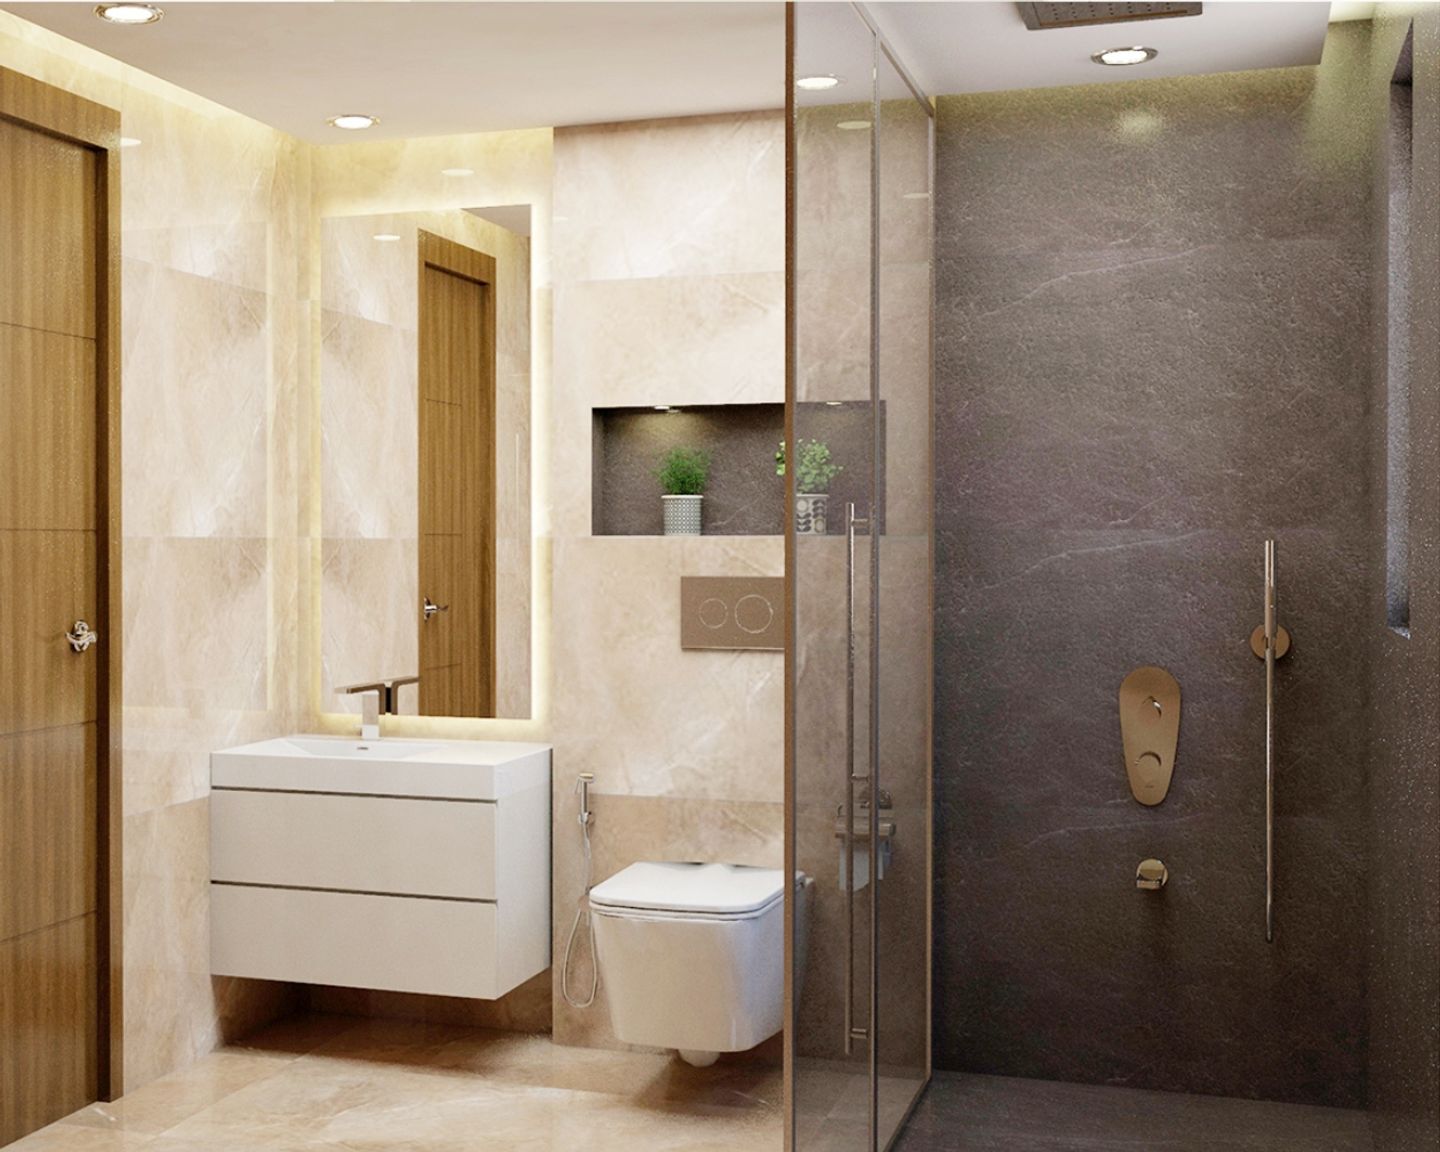 8X5 Ft Grey And Beige Bathroom Design - Livspace